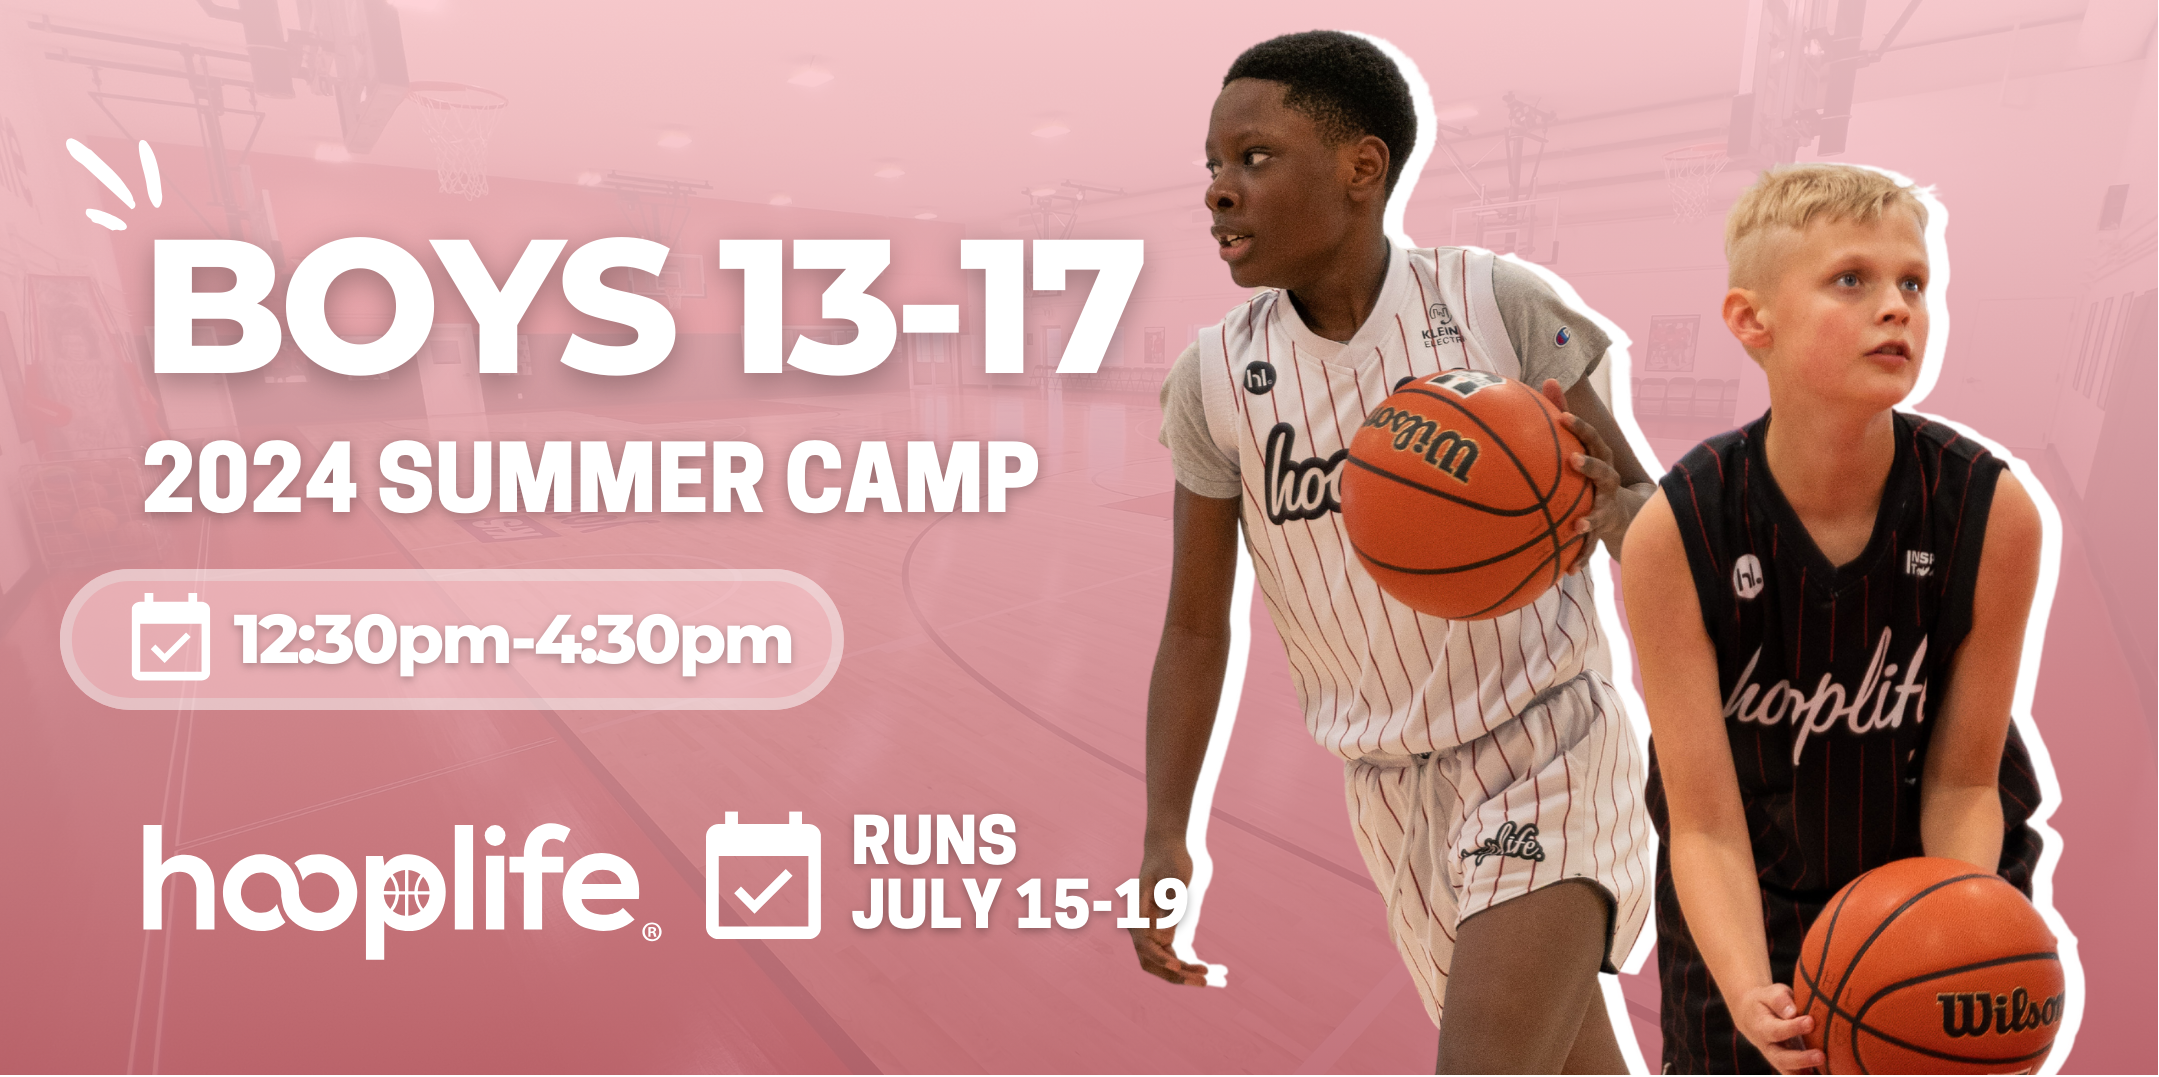 Boys 13-17 Summer Camp | July 15-19